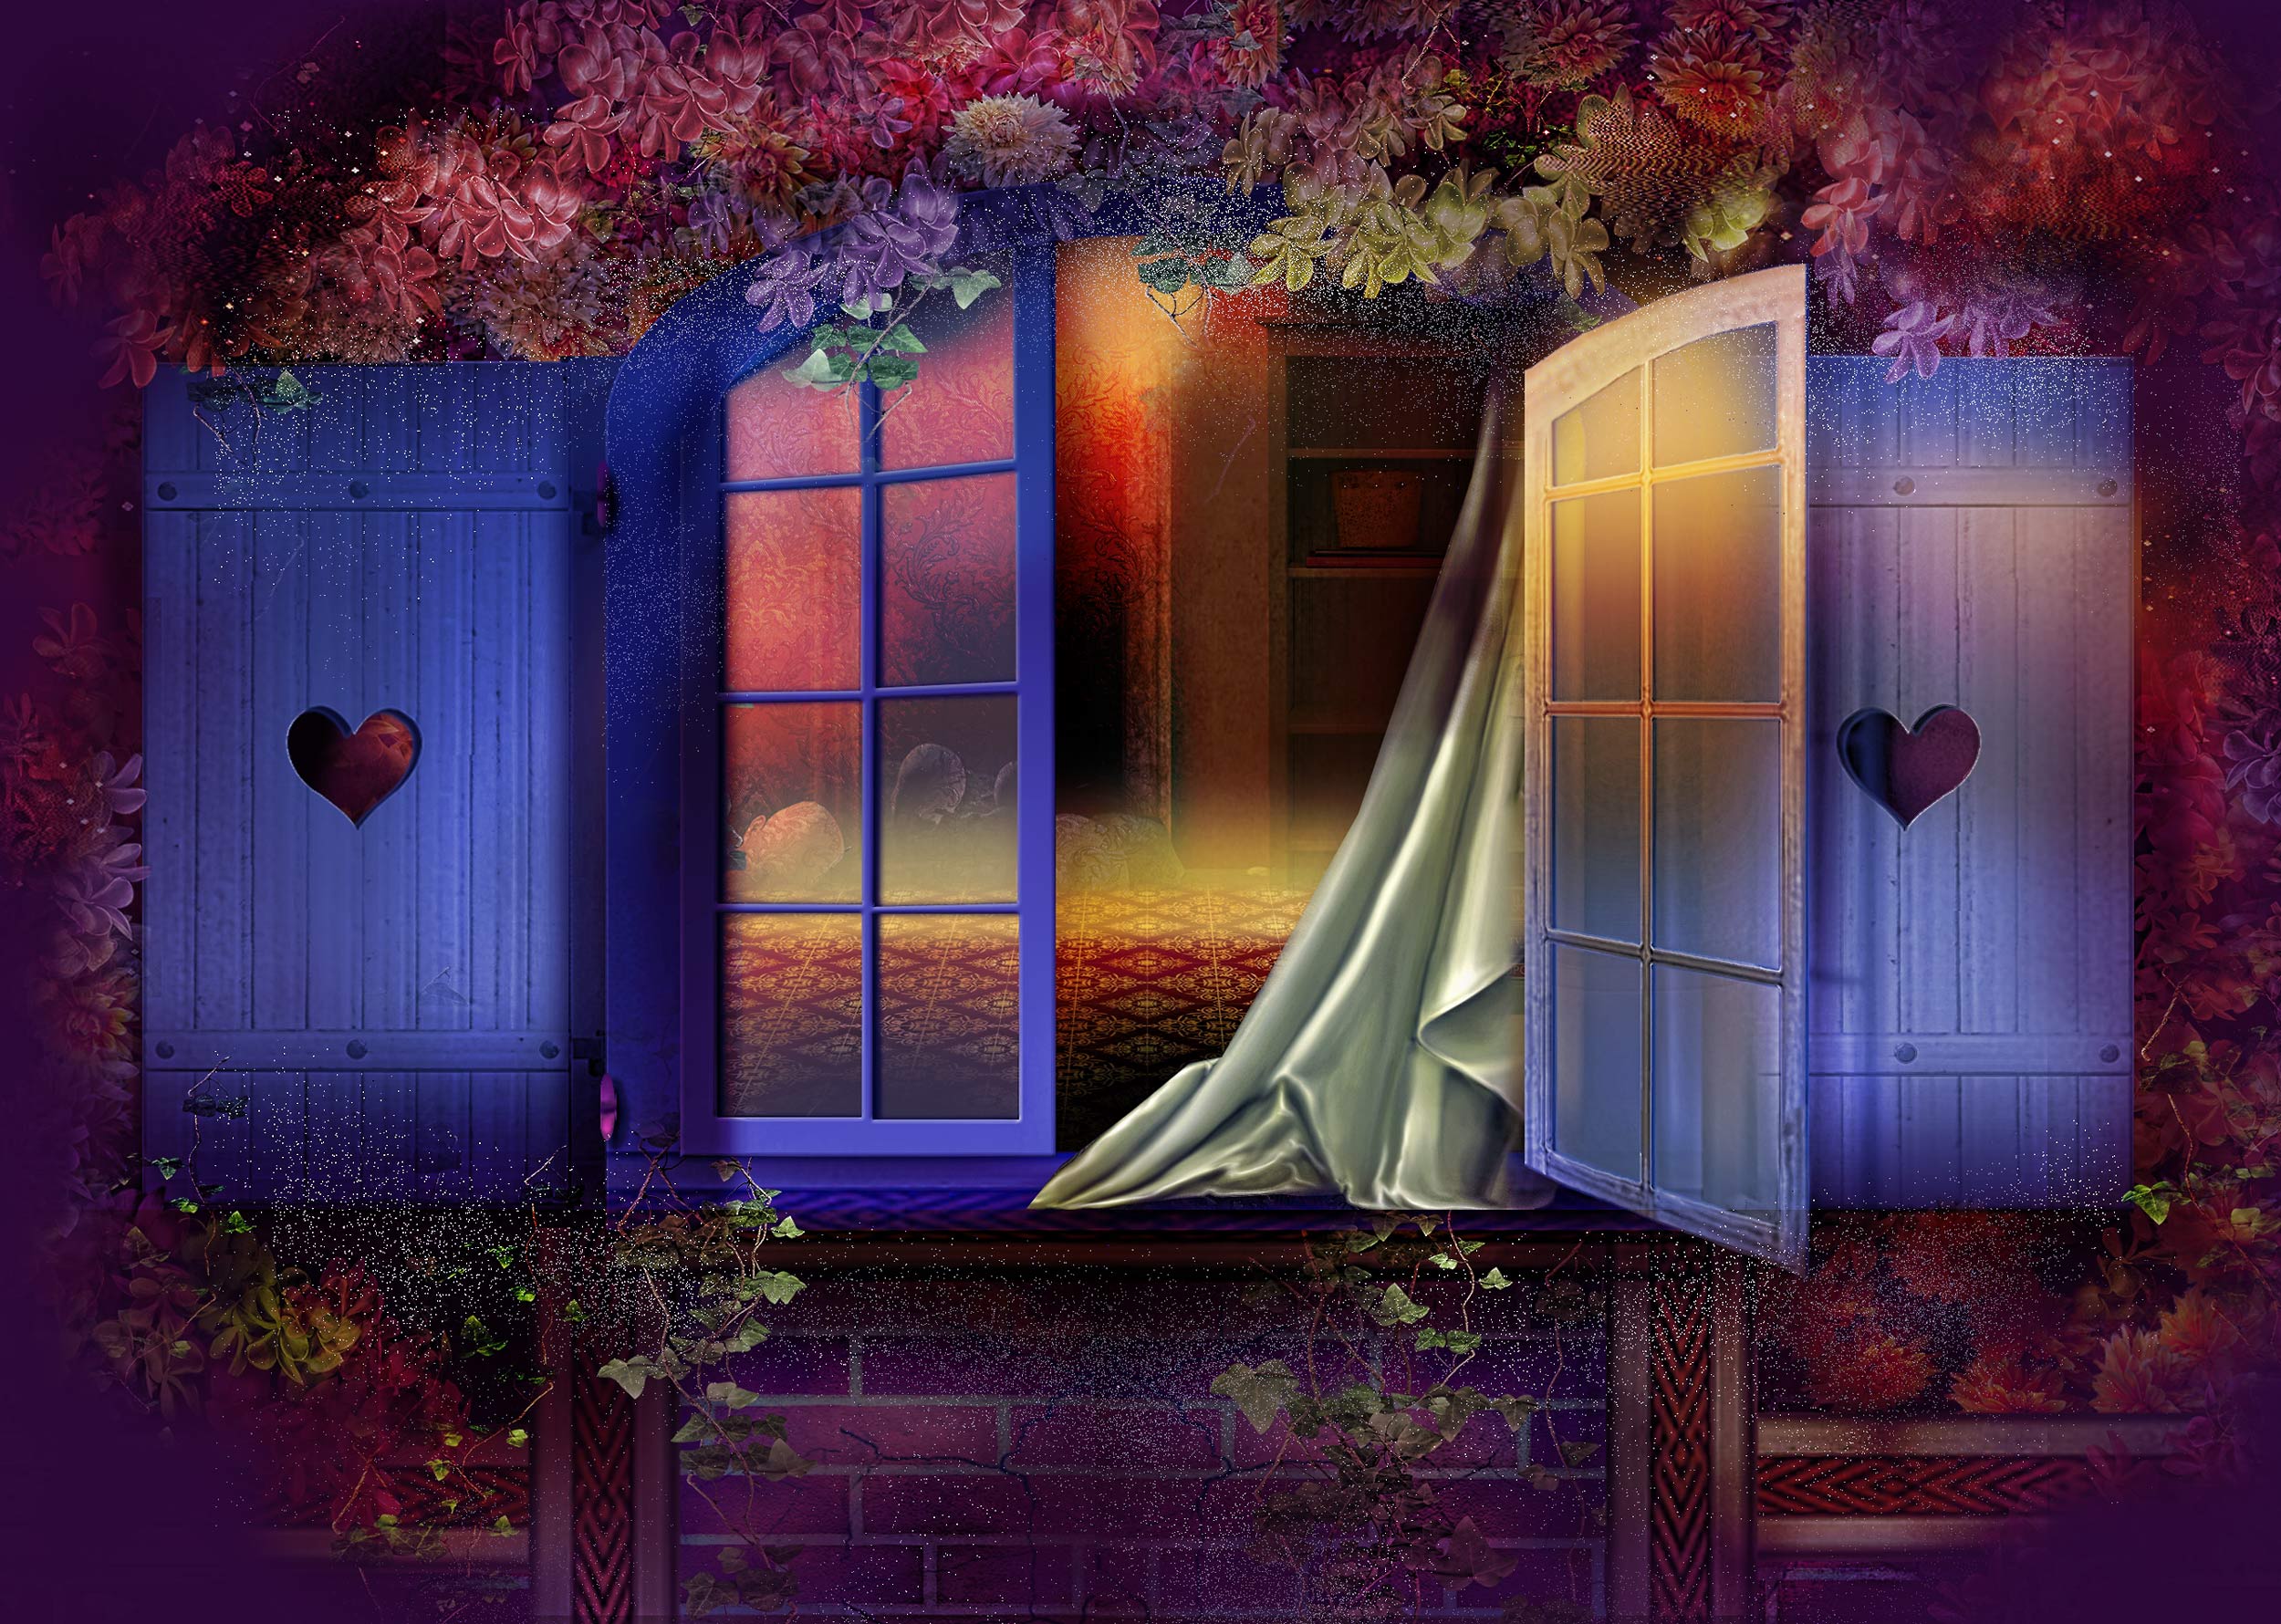 artistic, window, heart, night, shutters, spring, vine